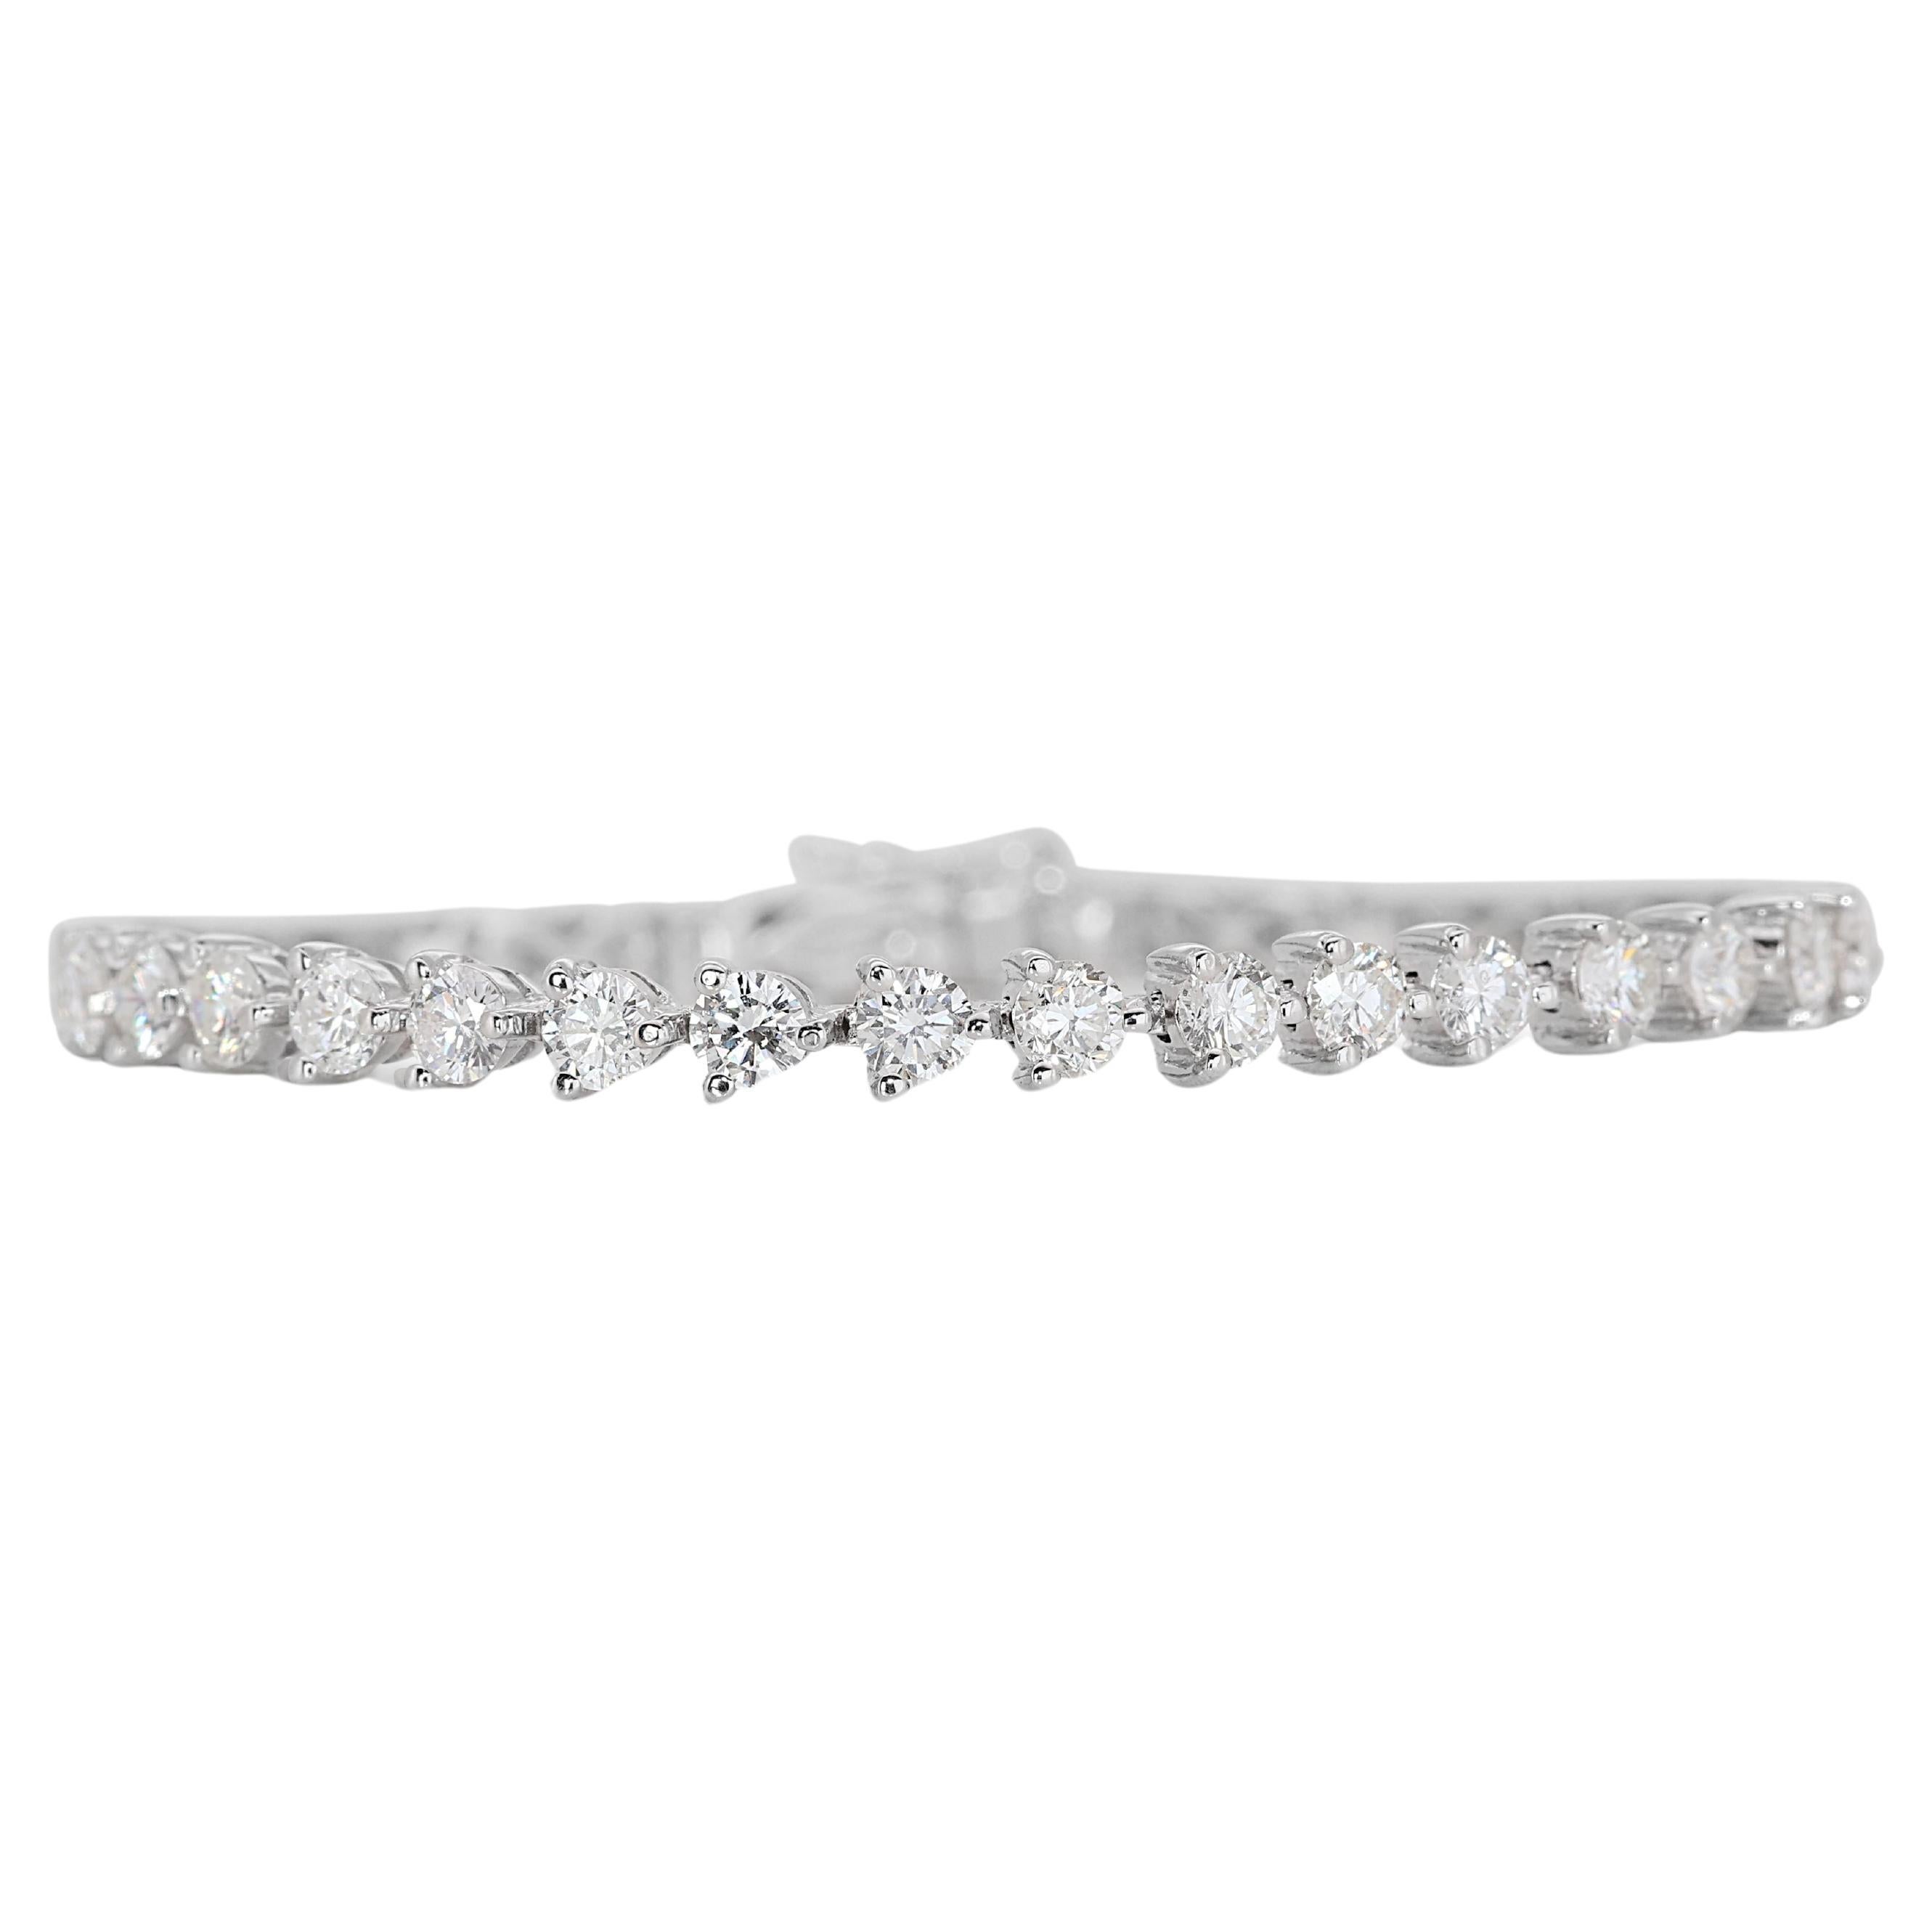 Sparkling 18k White Gold Tennis Bracelet w/ 1.60 Carat Natural Diamonds For Sale